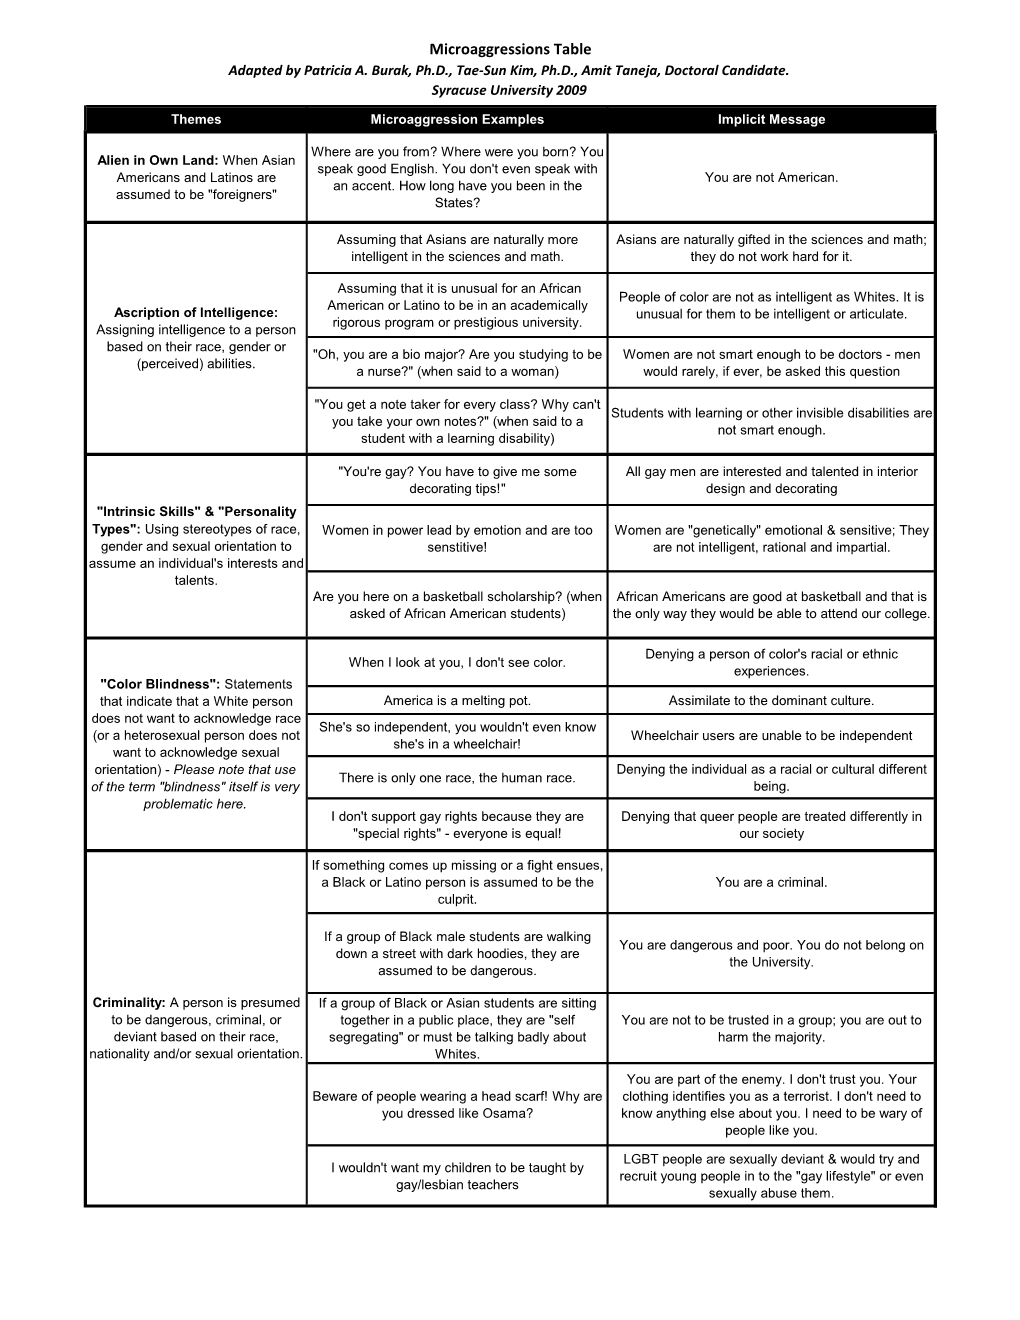 Microaggressions Table (Pdf)